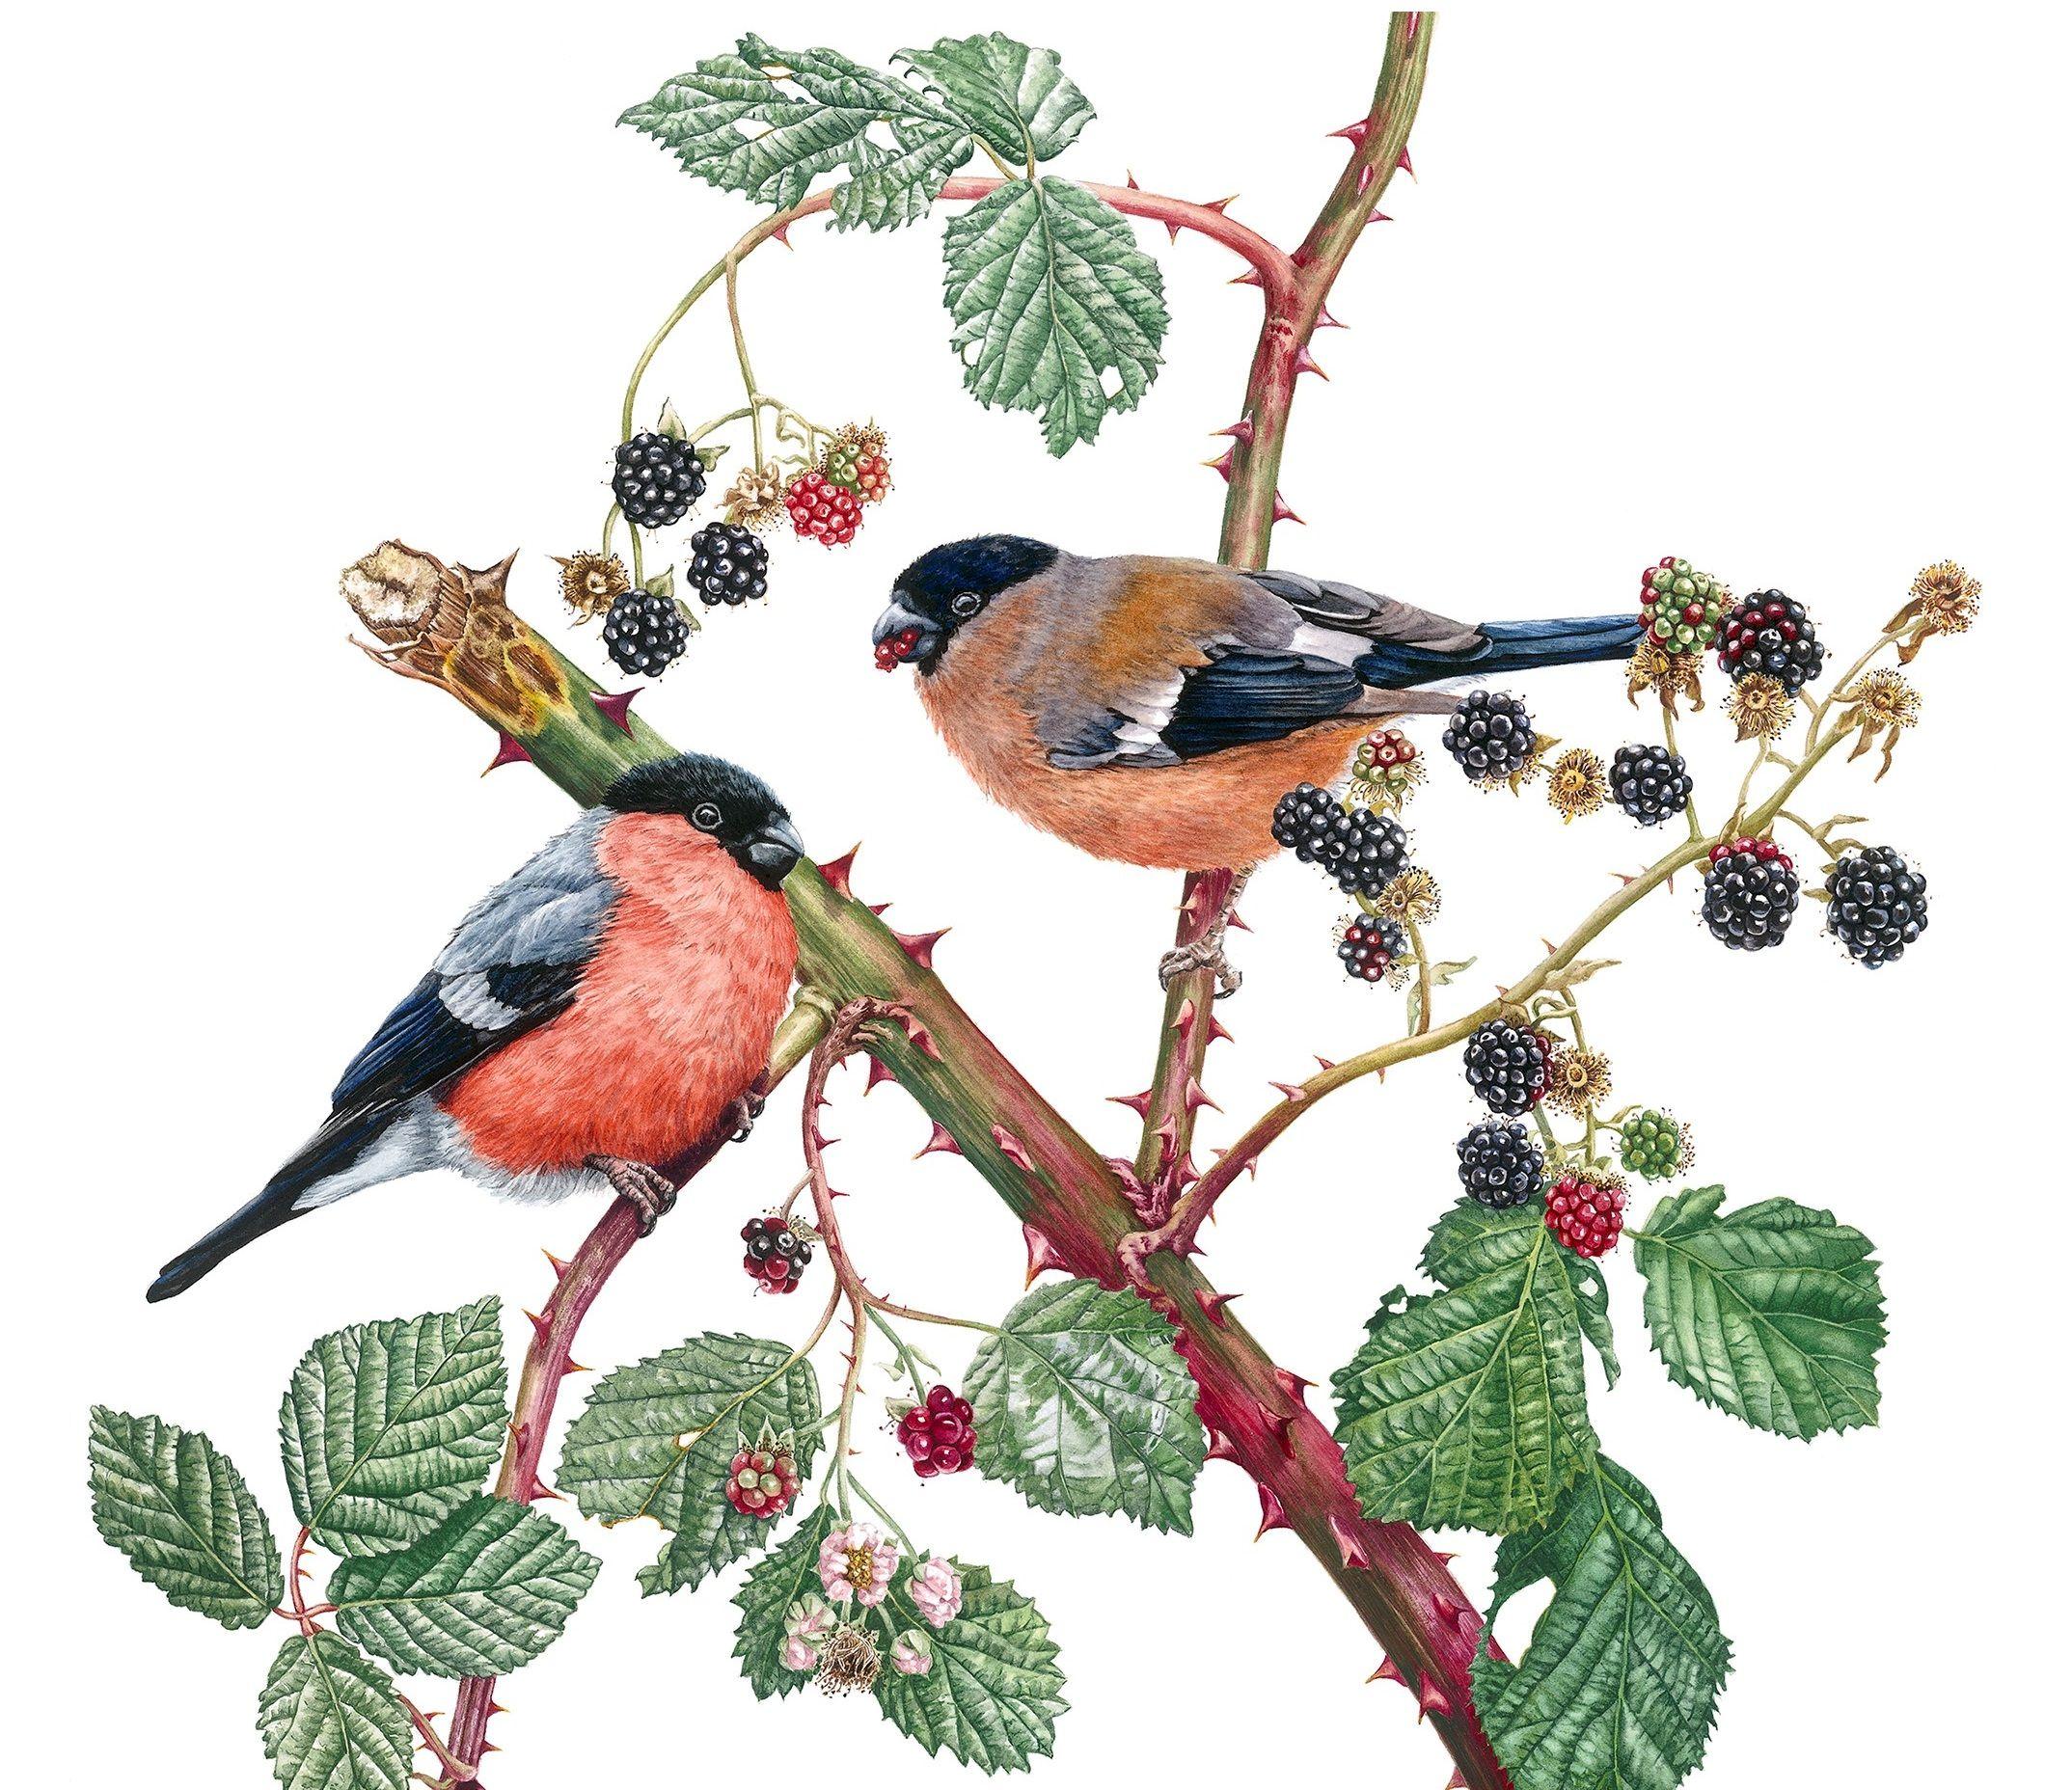 Bullfinches and Blackberries, Painting, Watercolor on Paper - Art by Zoe Elizabeth Norman